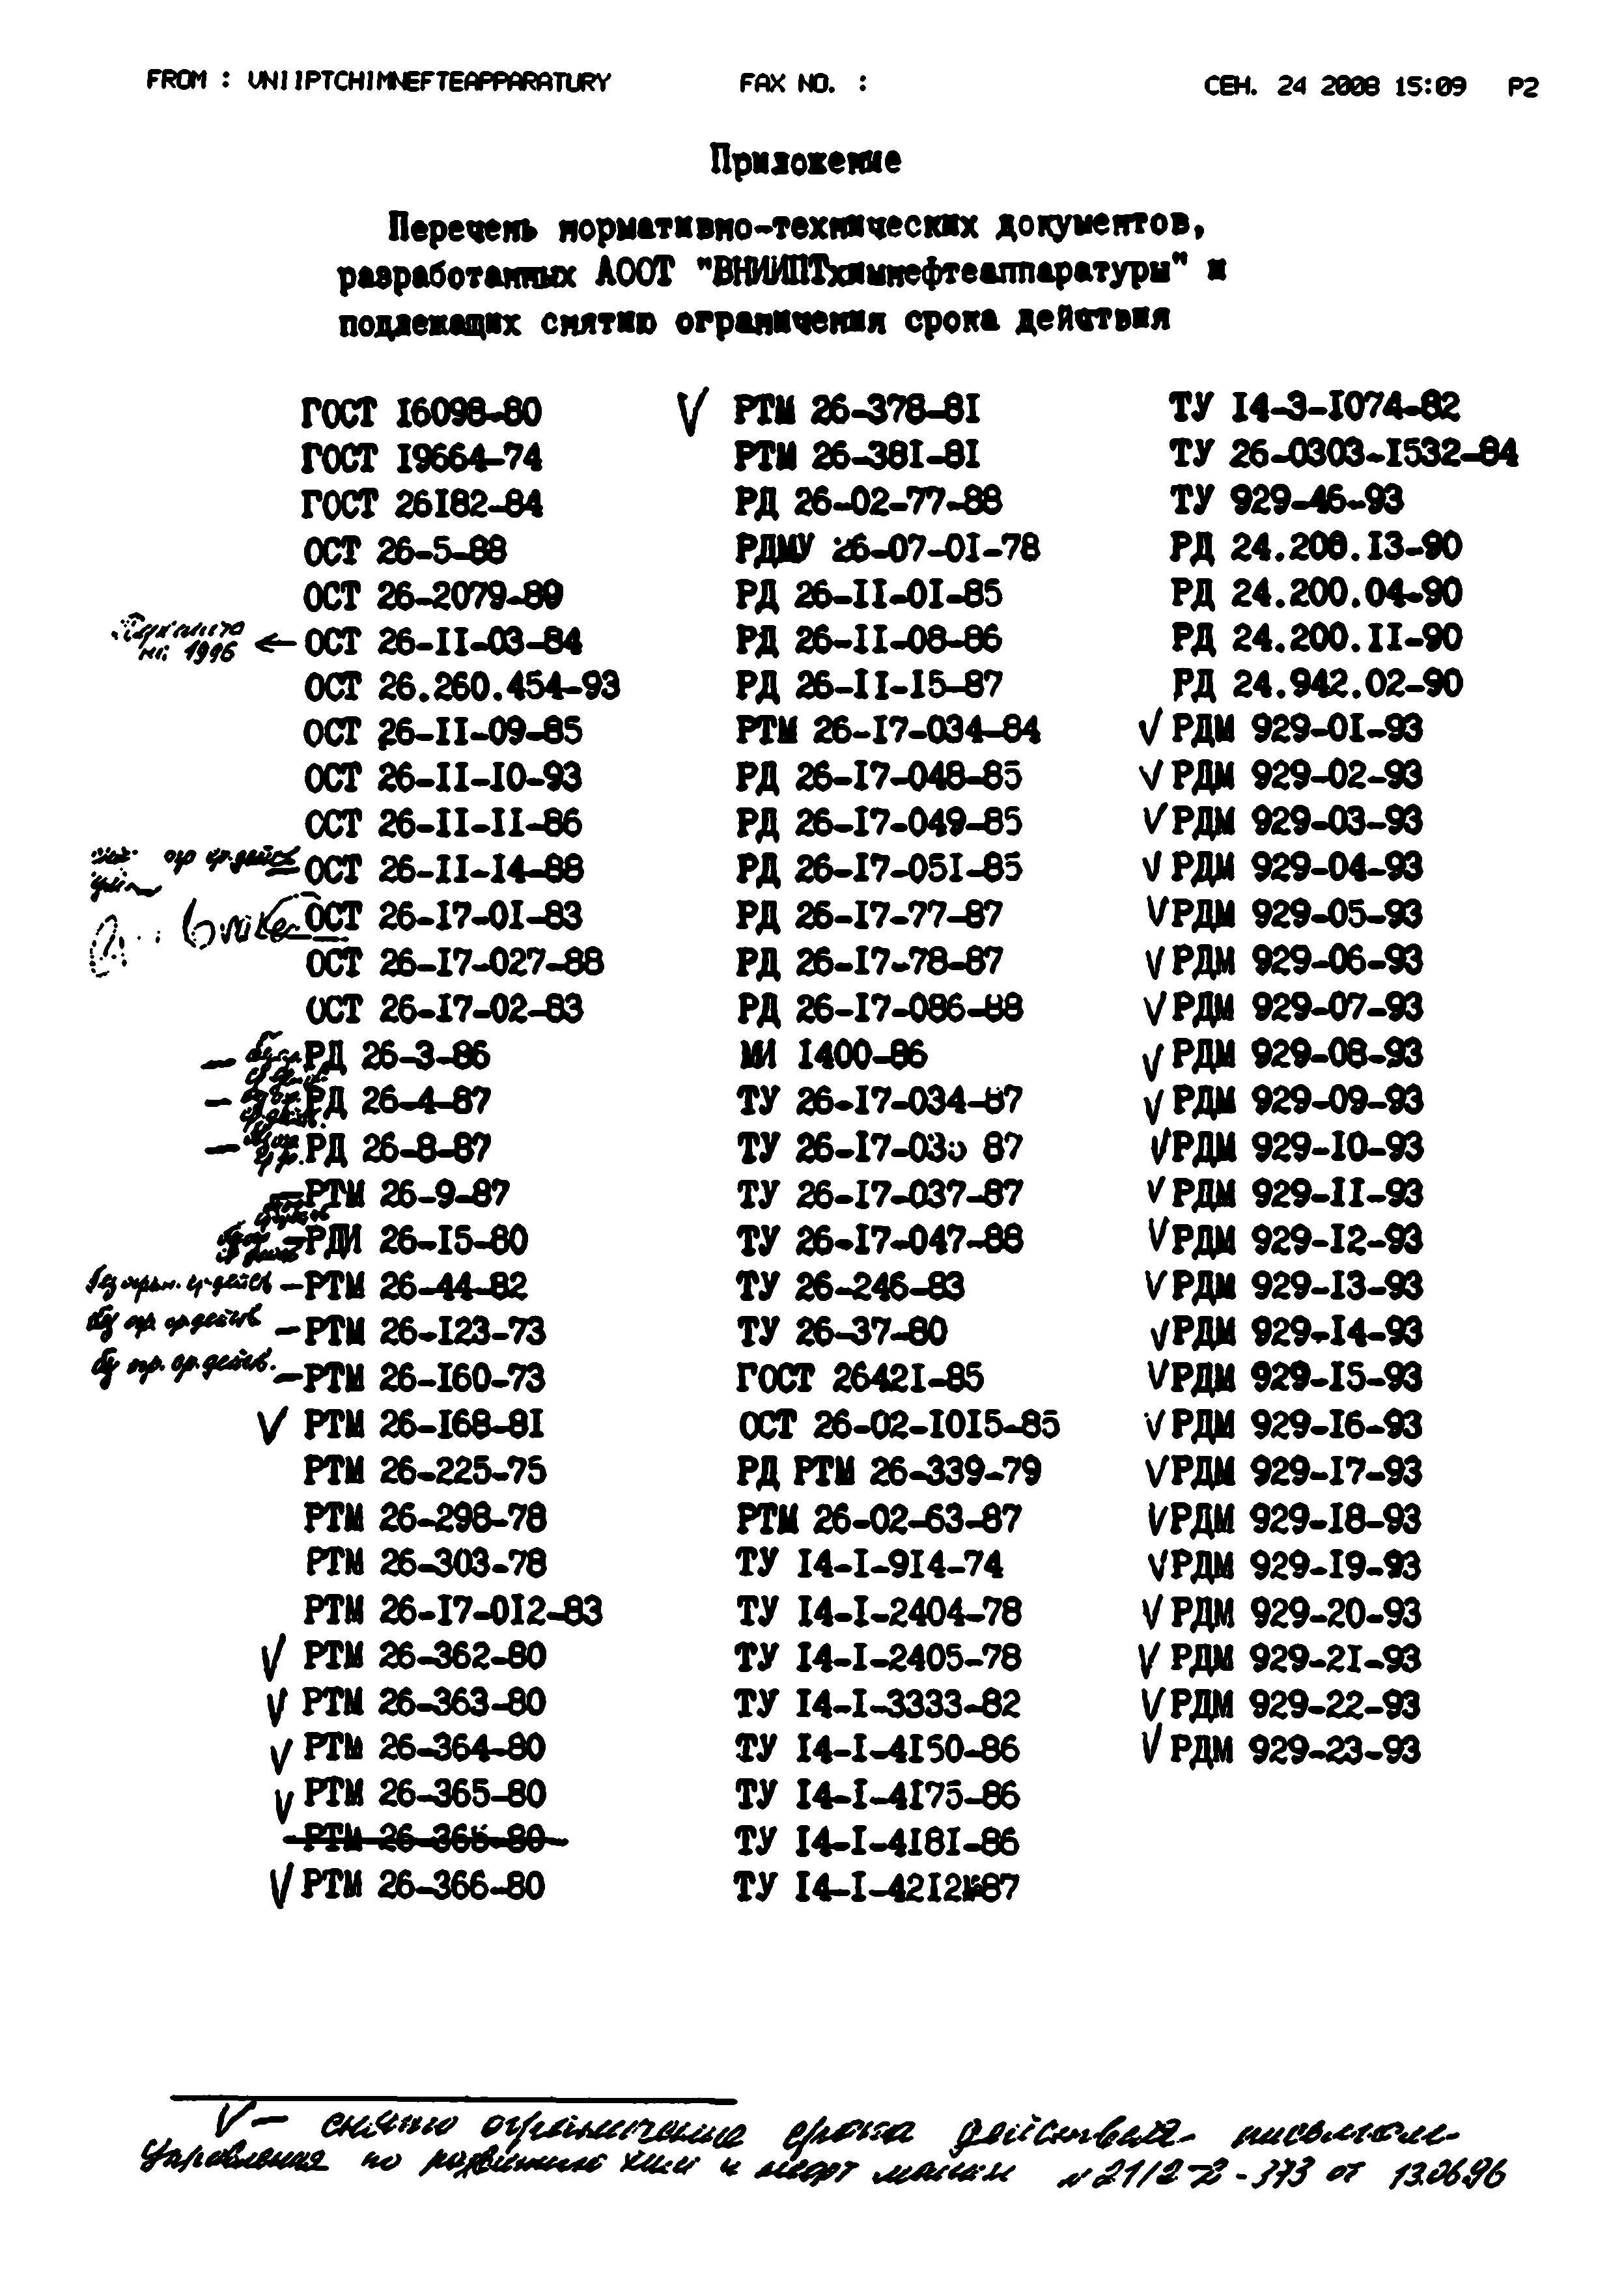 РДМ 929-14-93